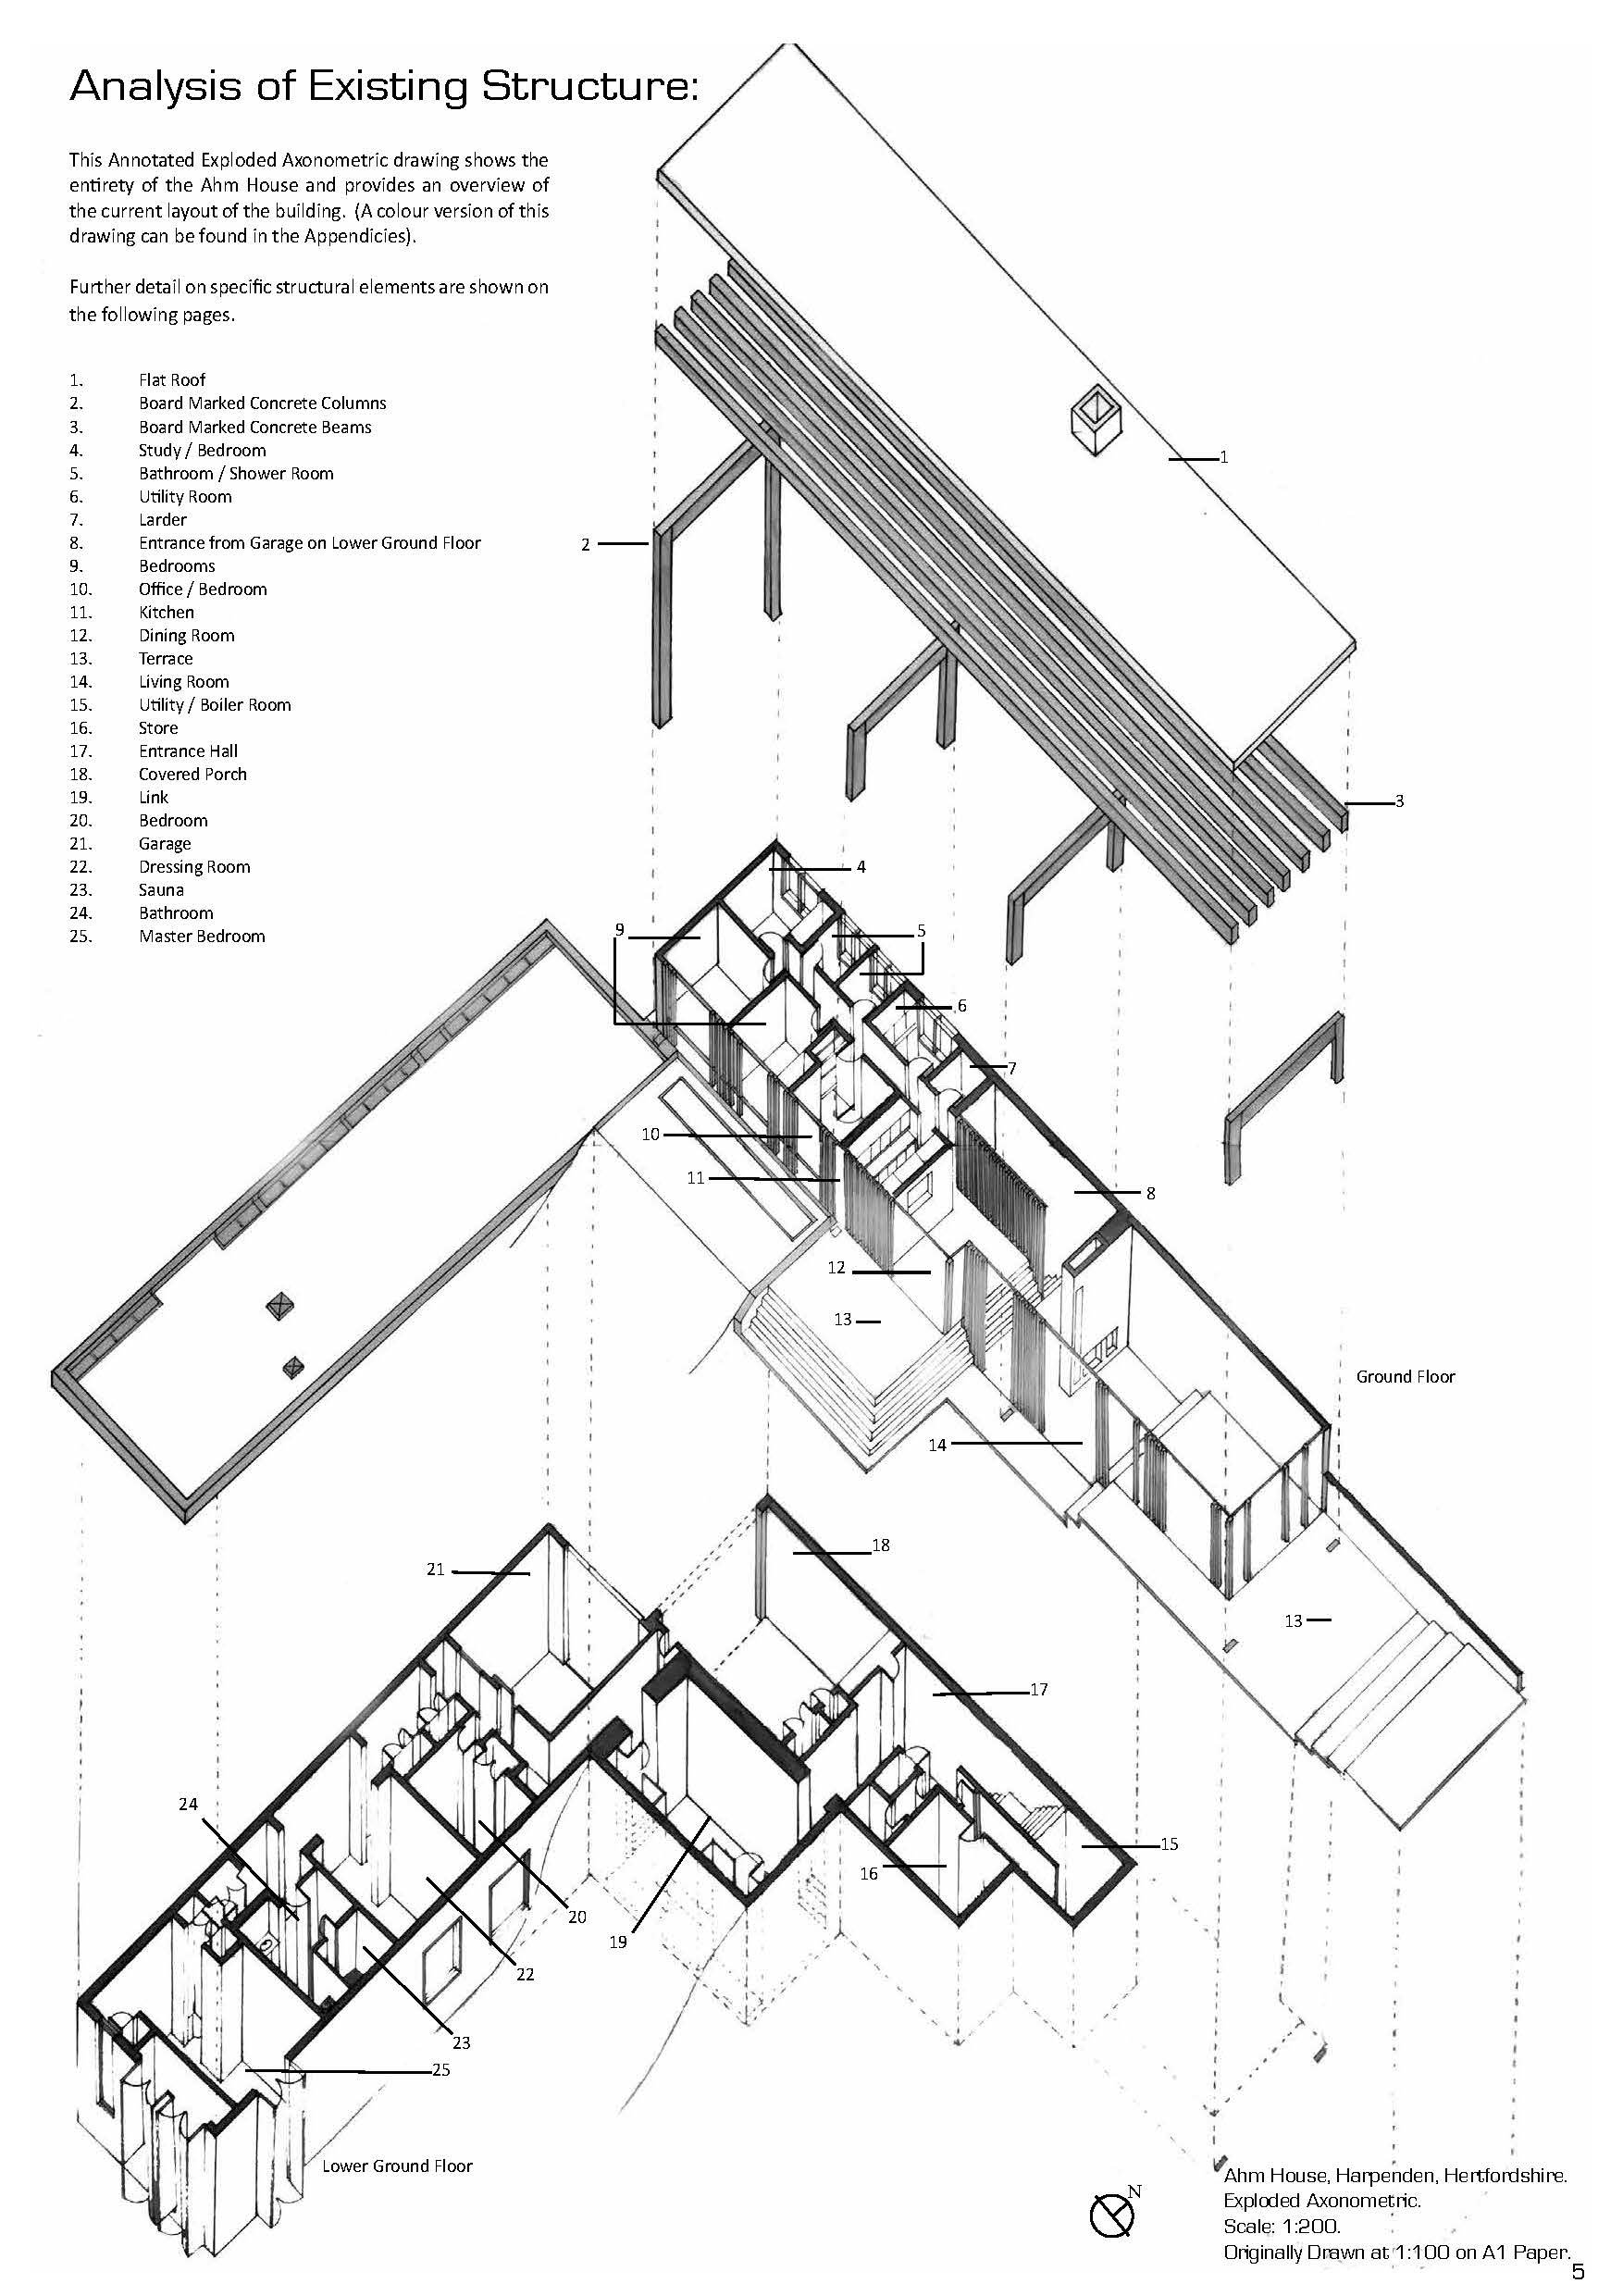 HannahBibby_Tech1AnnotatedDrawings_CaseStudy_Structural analysis of Ahm House.jpg